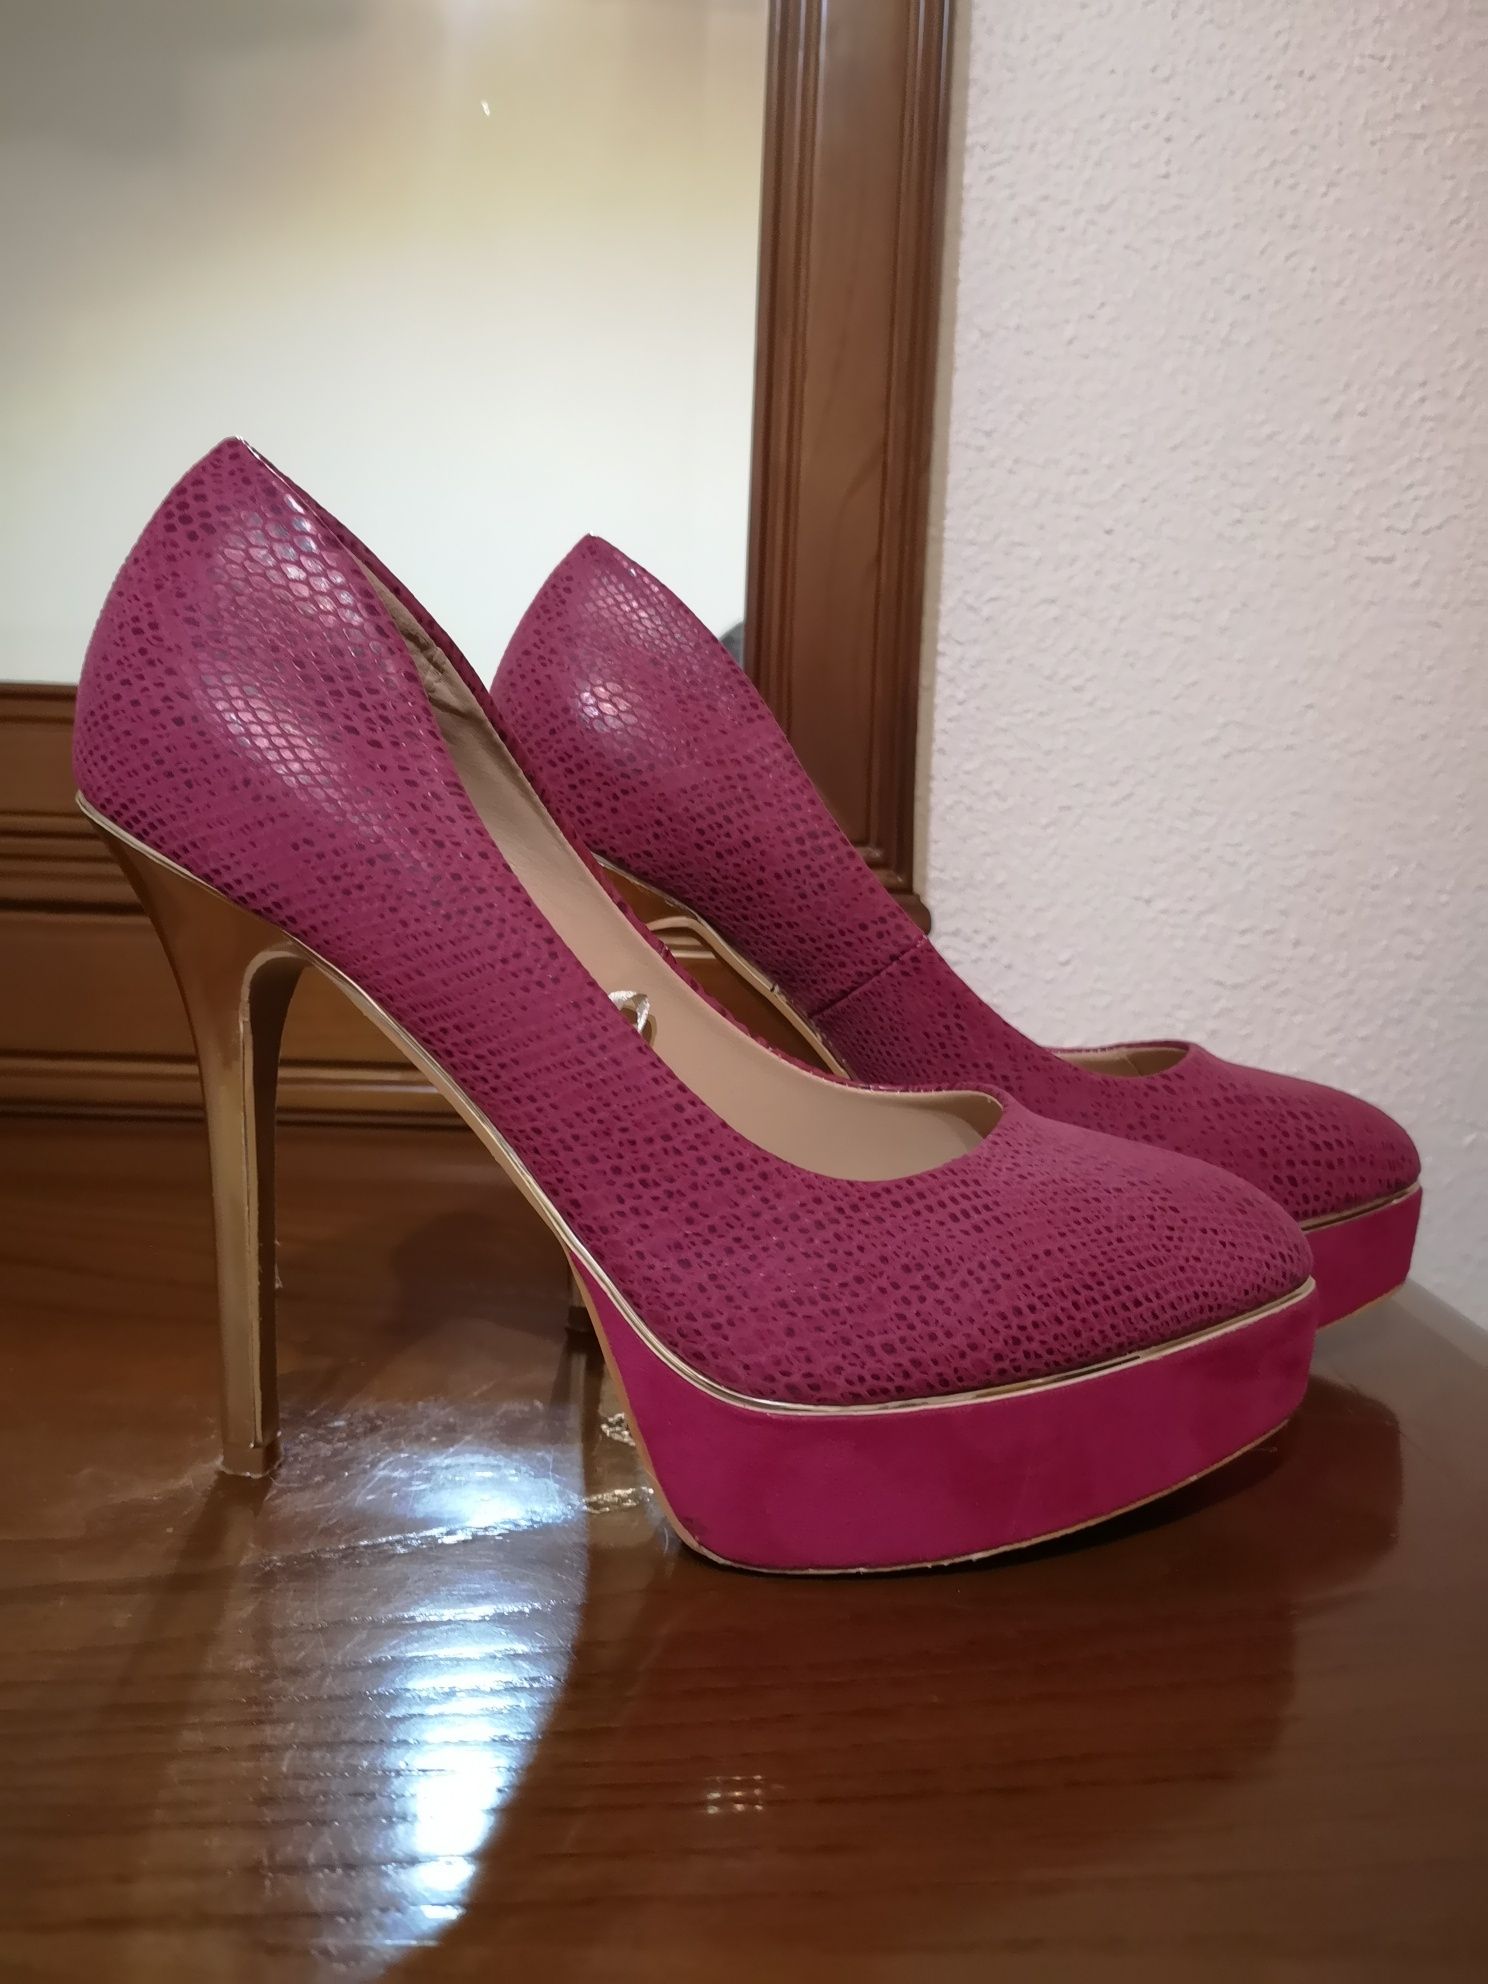 Sapato Senhora Rosa 37